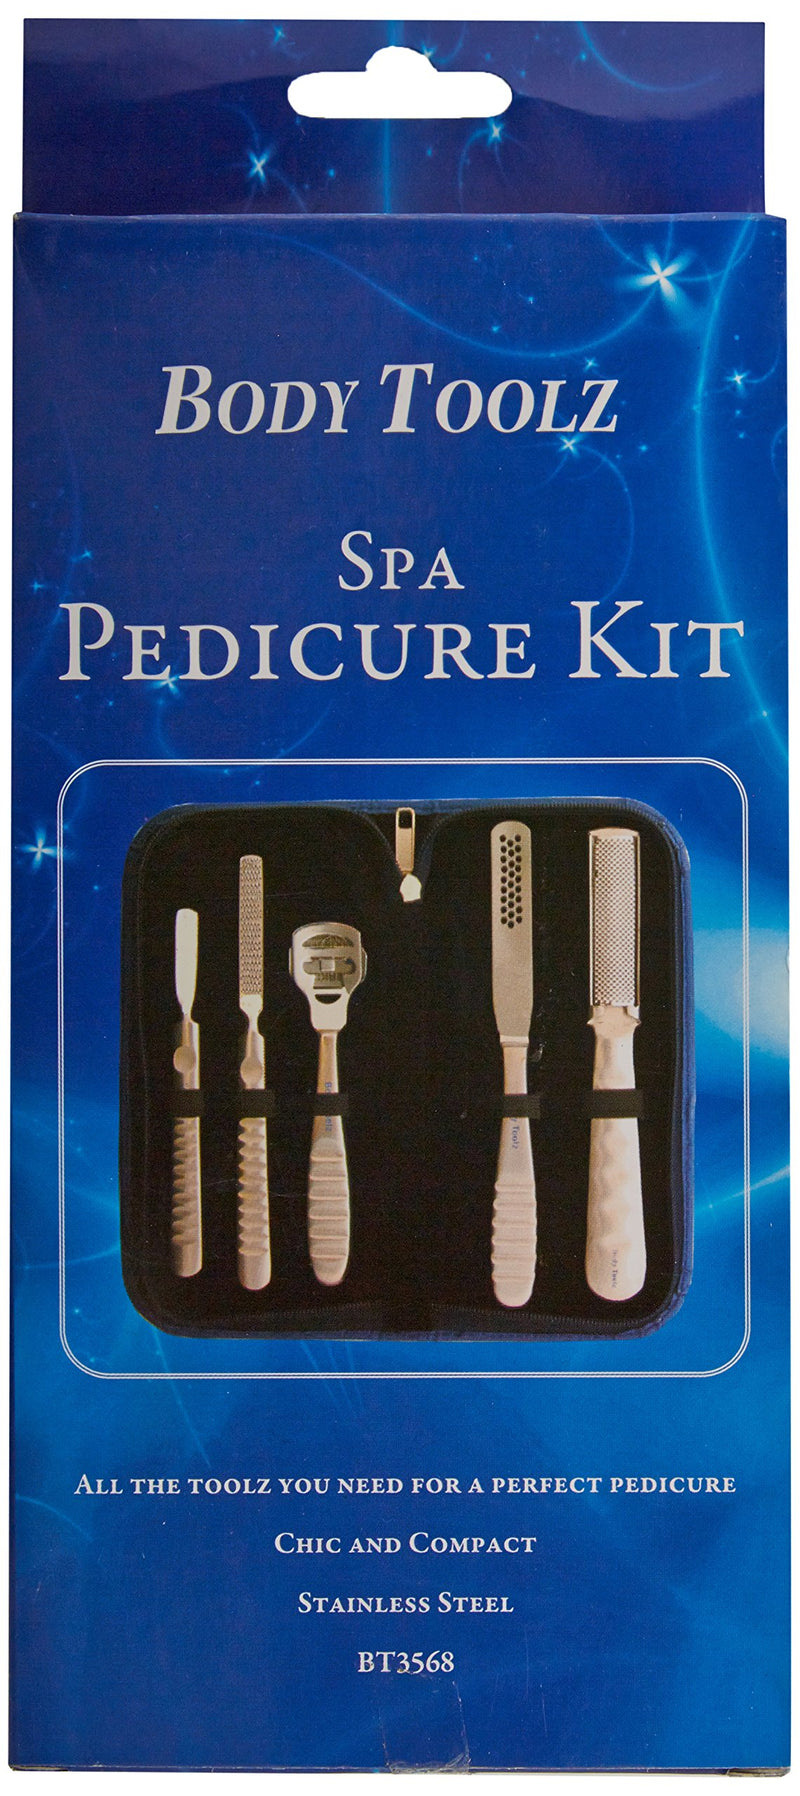 [Australia] - Deluxe Pedicure Spa Kit 